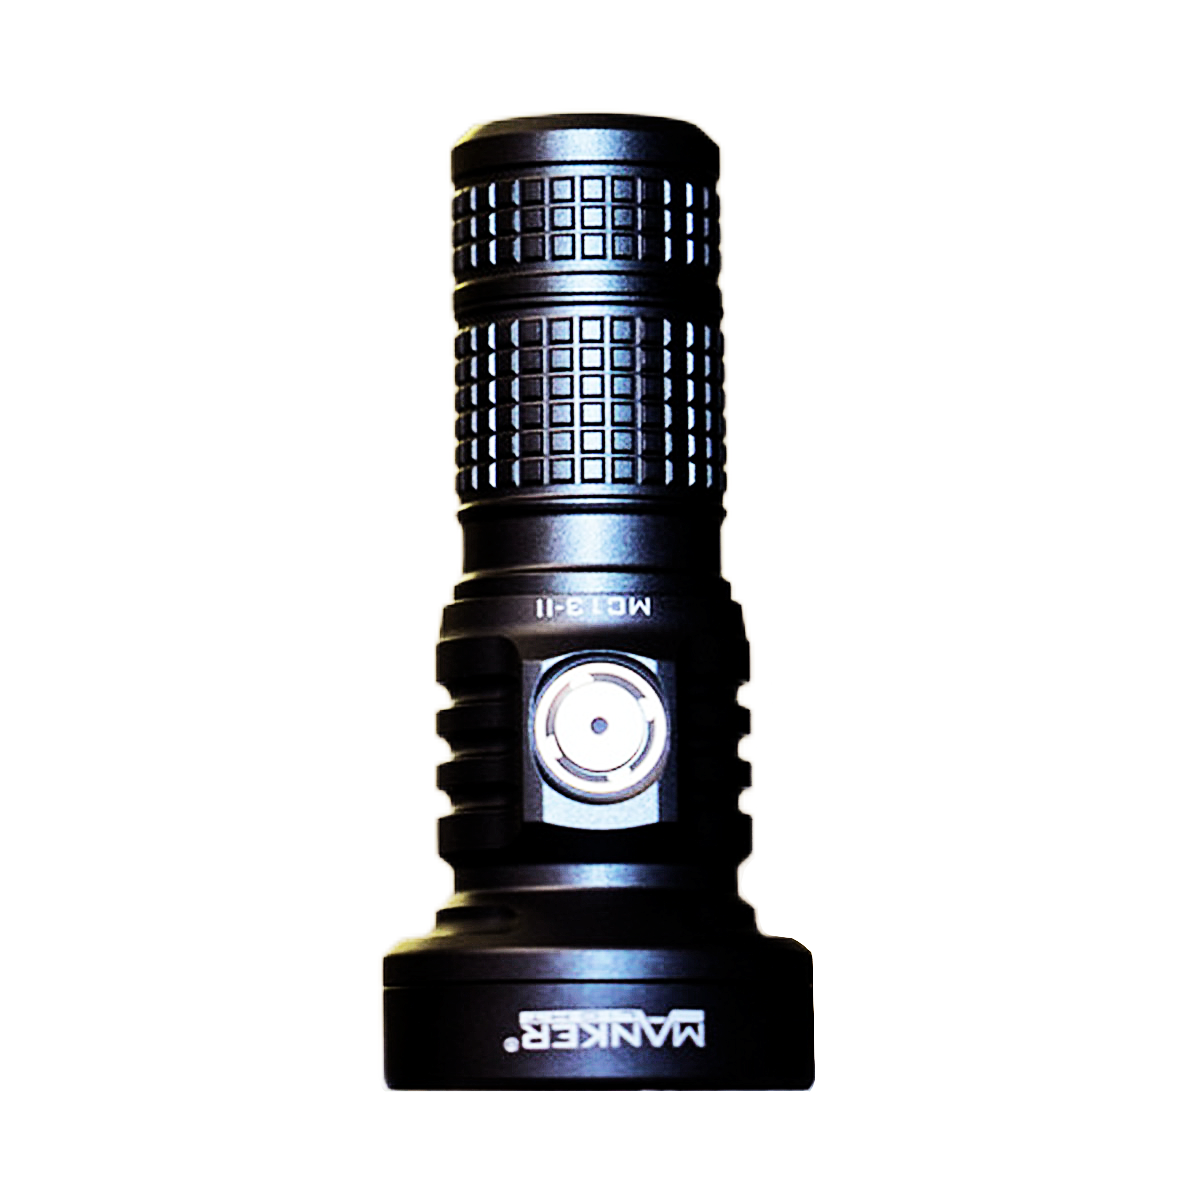 Mankerlight MC13 II SFT40 Edc Flashlight Dual Use 18650 and 18350 Battery PVD Metal Grey